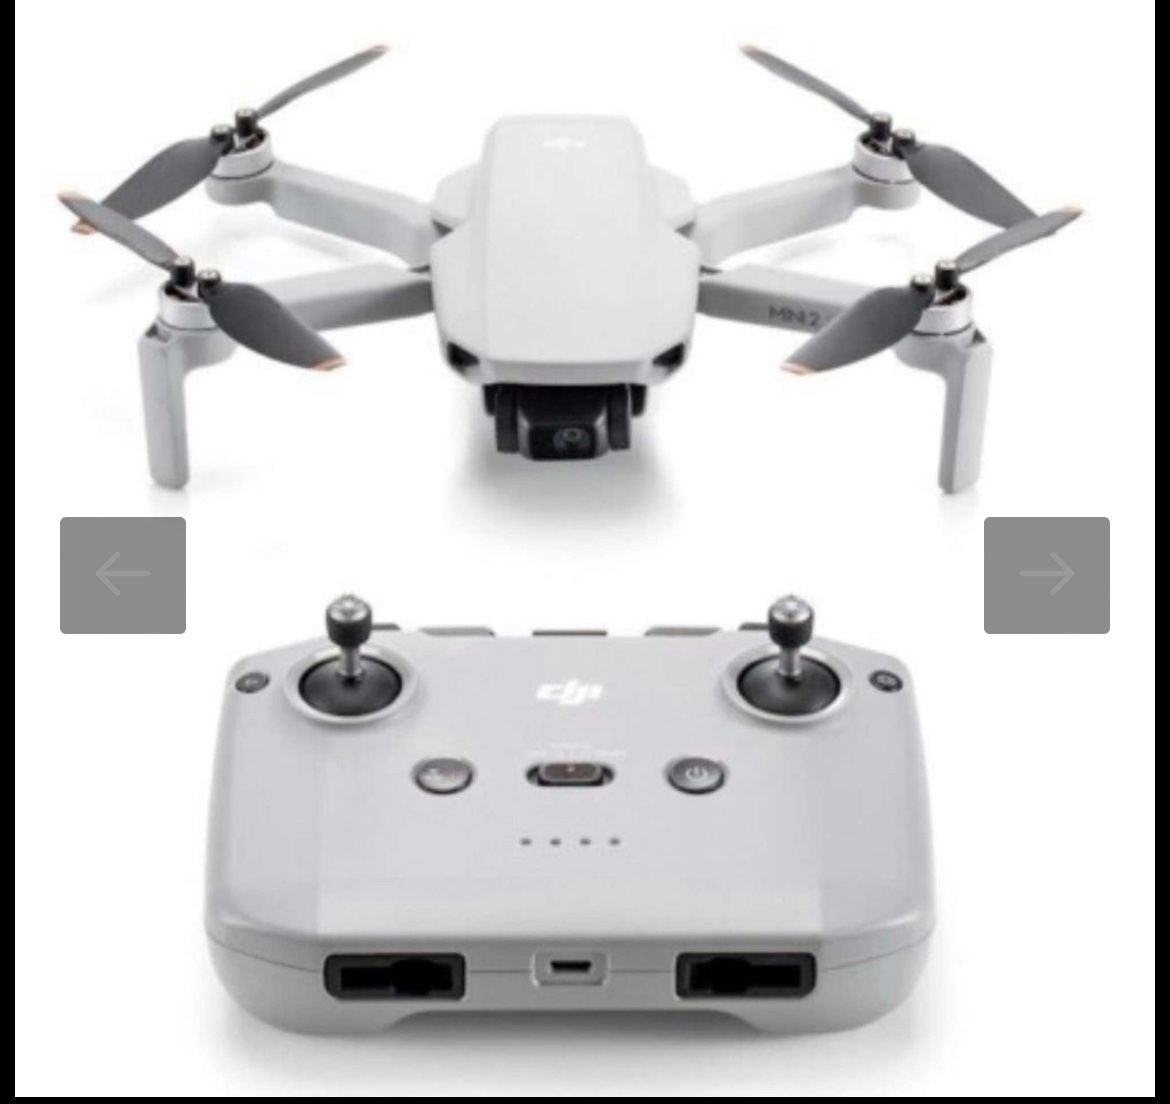 DJI Mini 2 SE Foldable Drone Video Quadcopter https://offerup.co/faYXKzQFnY?$deeplink_path=/redirect/ 